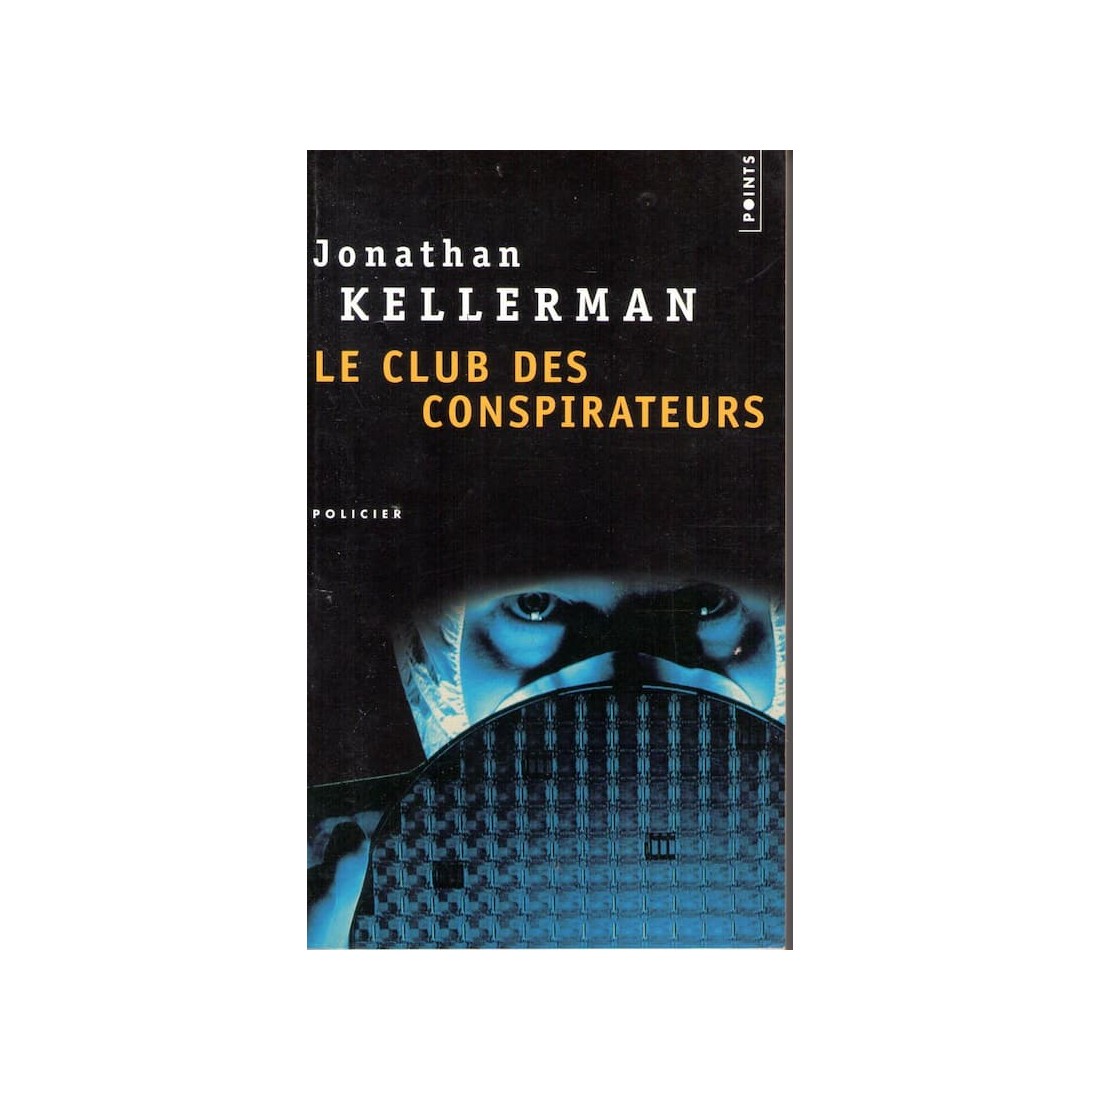 Le club des conspirateurs - Roman de Jonathan Kellerman - Ocazlivres.com